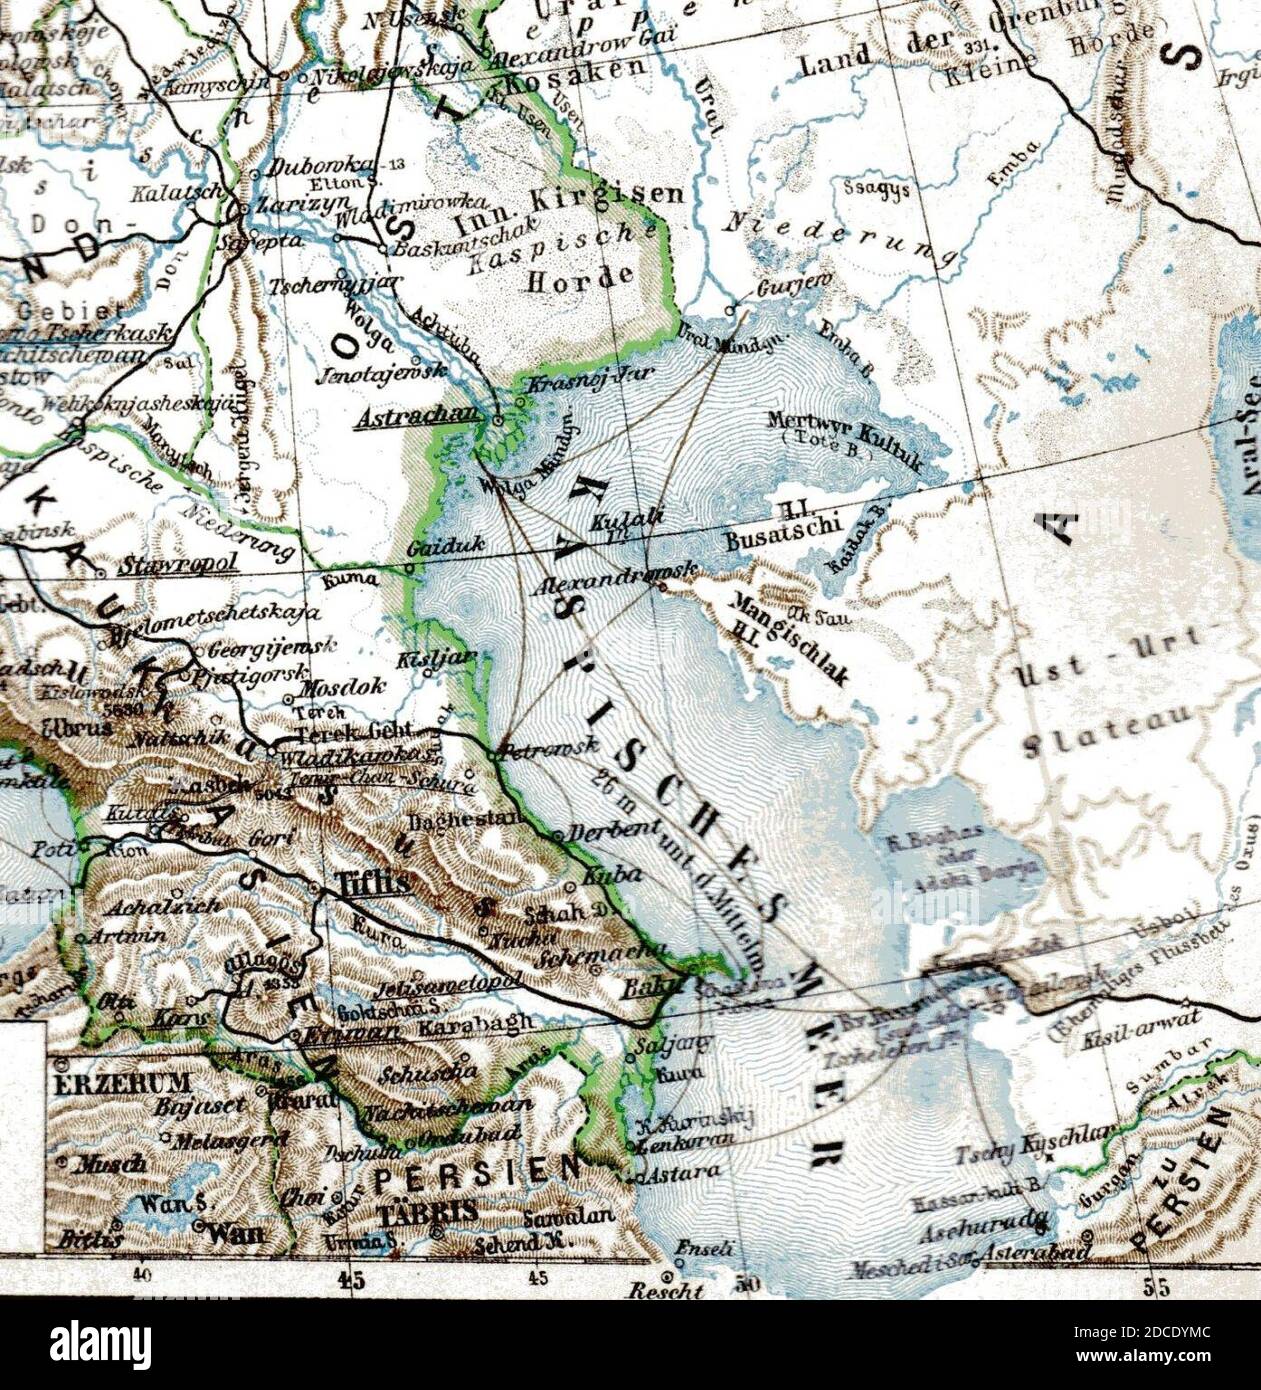 Kaspisches Meer um 1907. Ausschnitt aus Karte Europäisches Russland, Meyers Großes Konversations-Lexikon, Bad. 17, LeipzigWien 1907, nach S. 288. Stock Photo